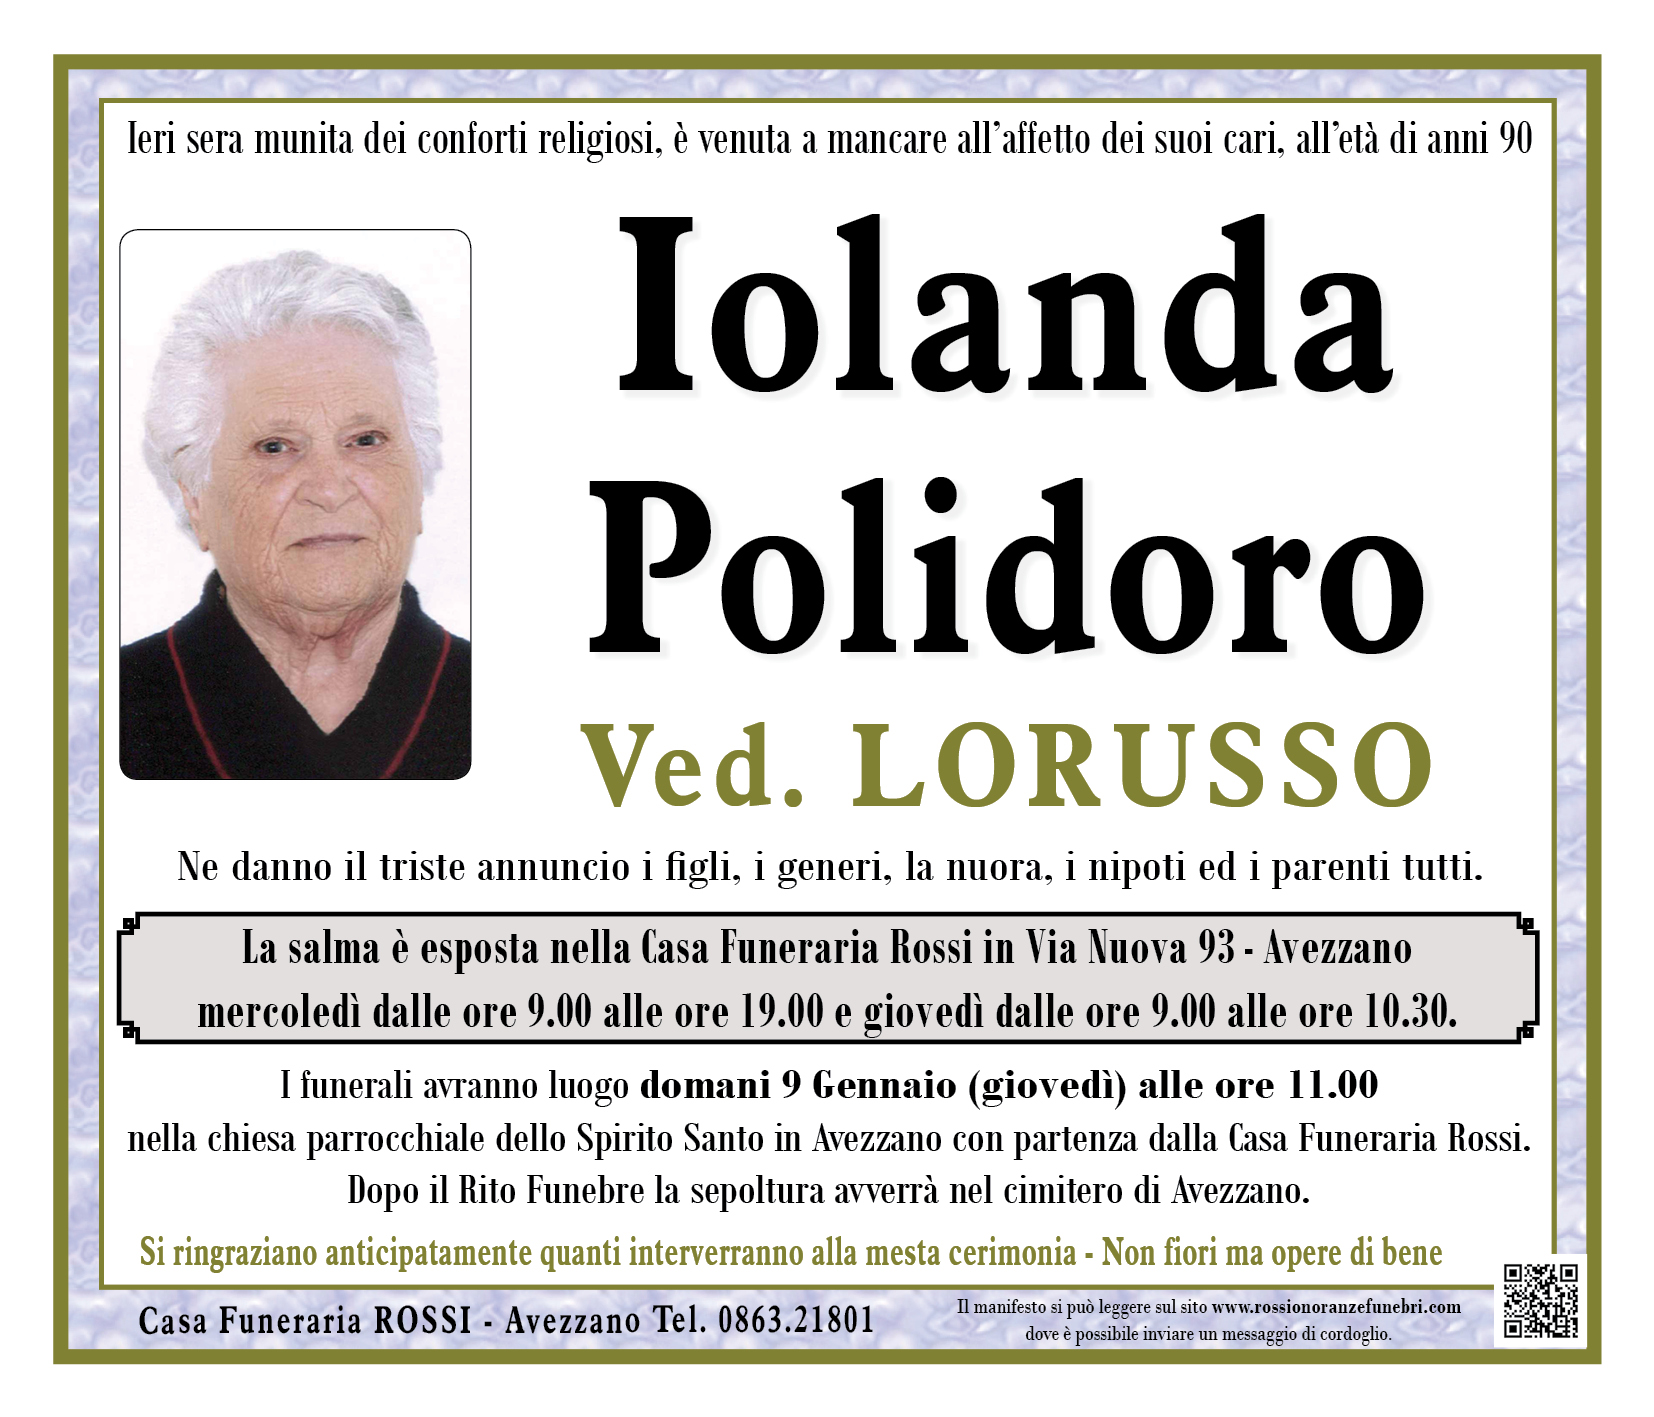 Iolanda Polidoro